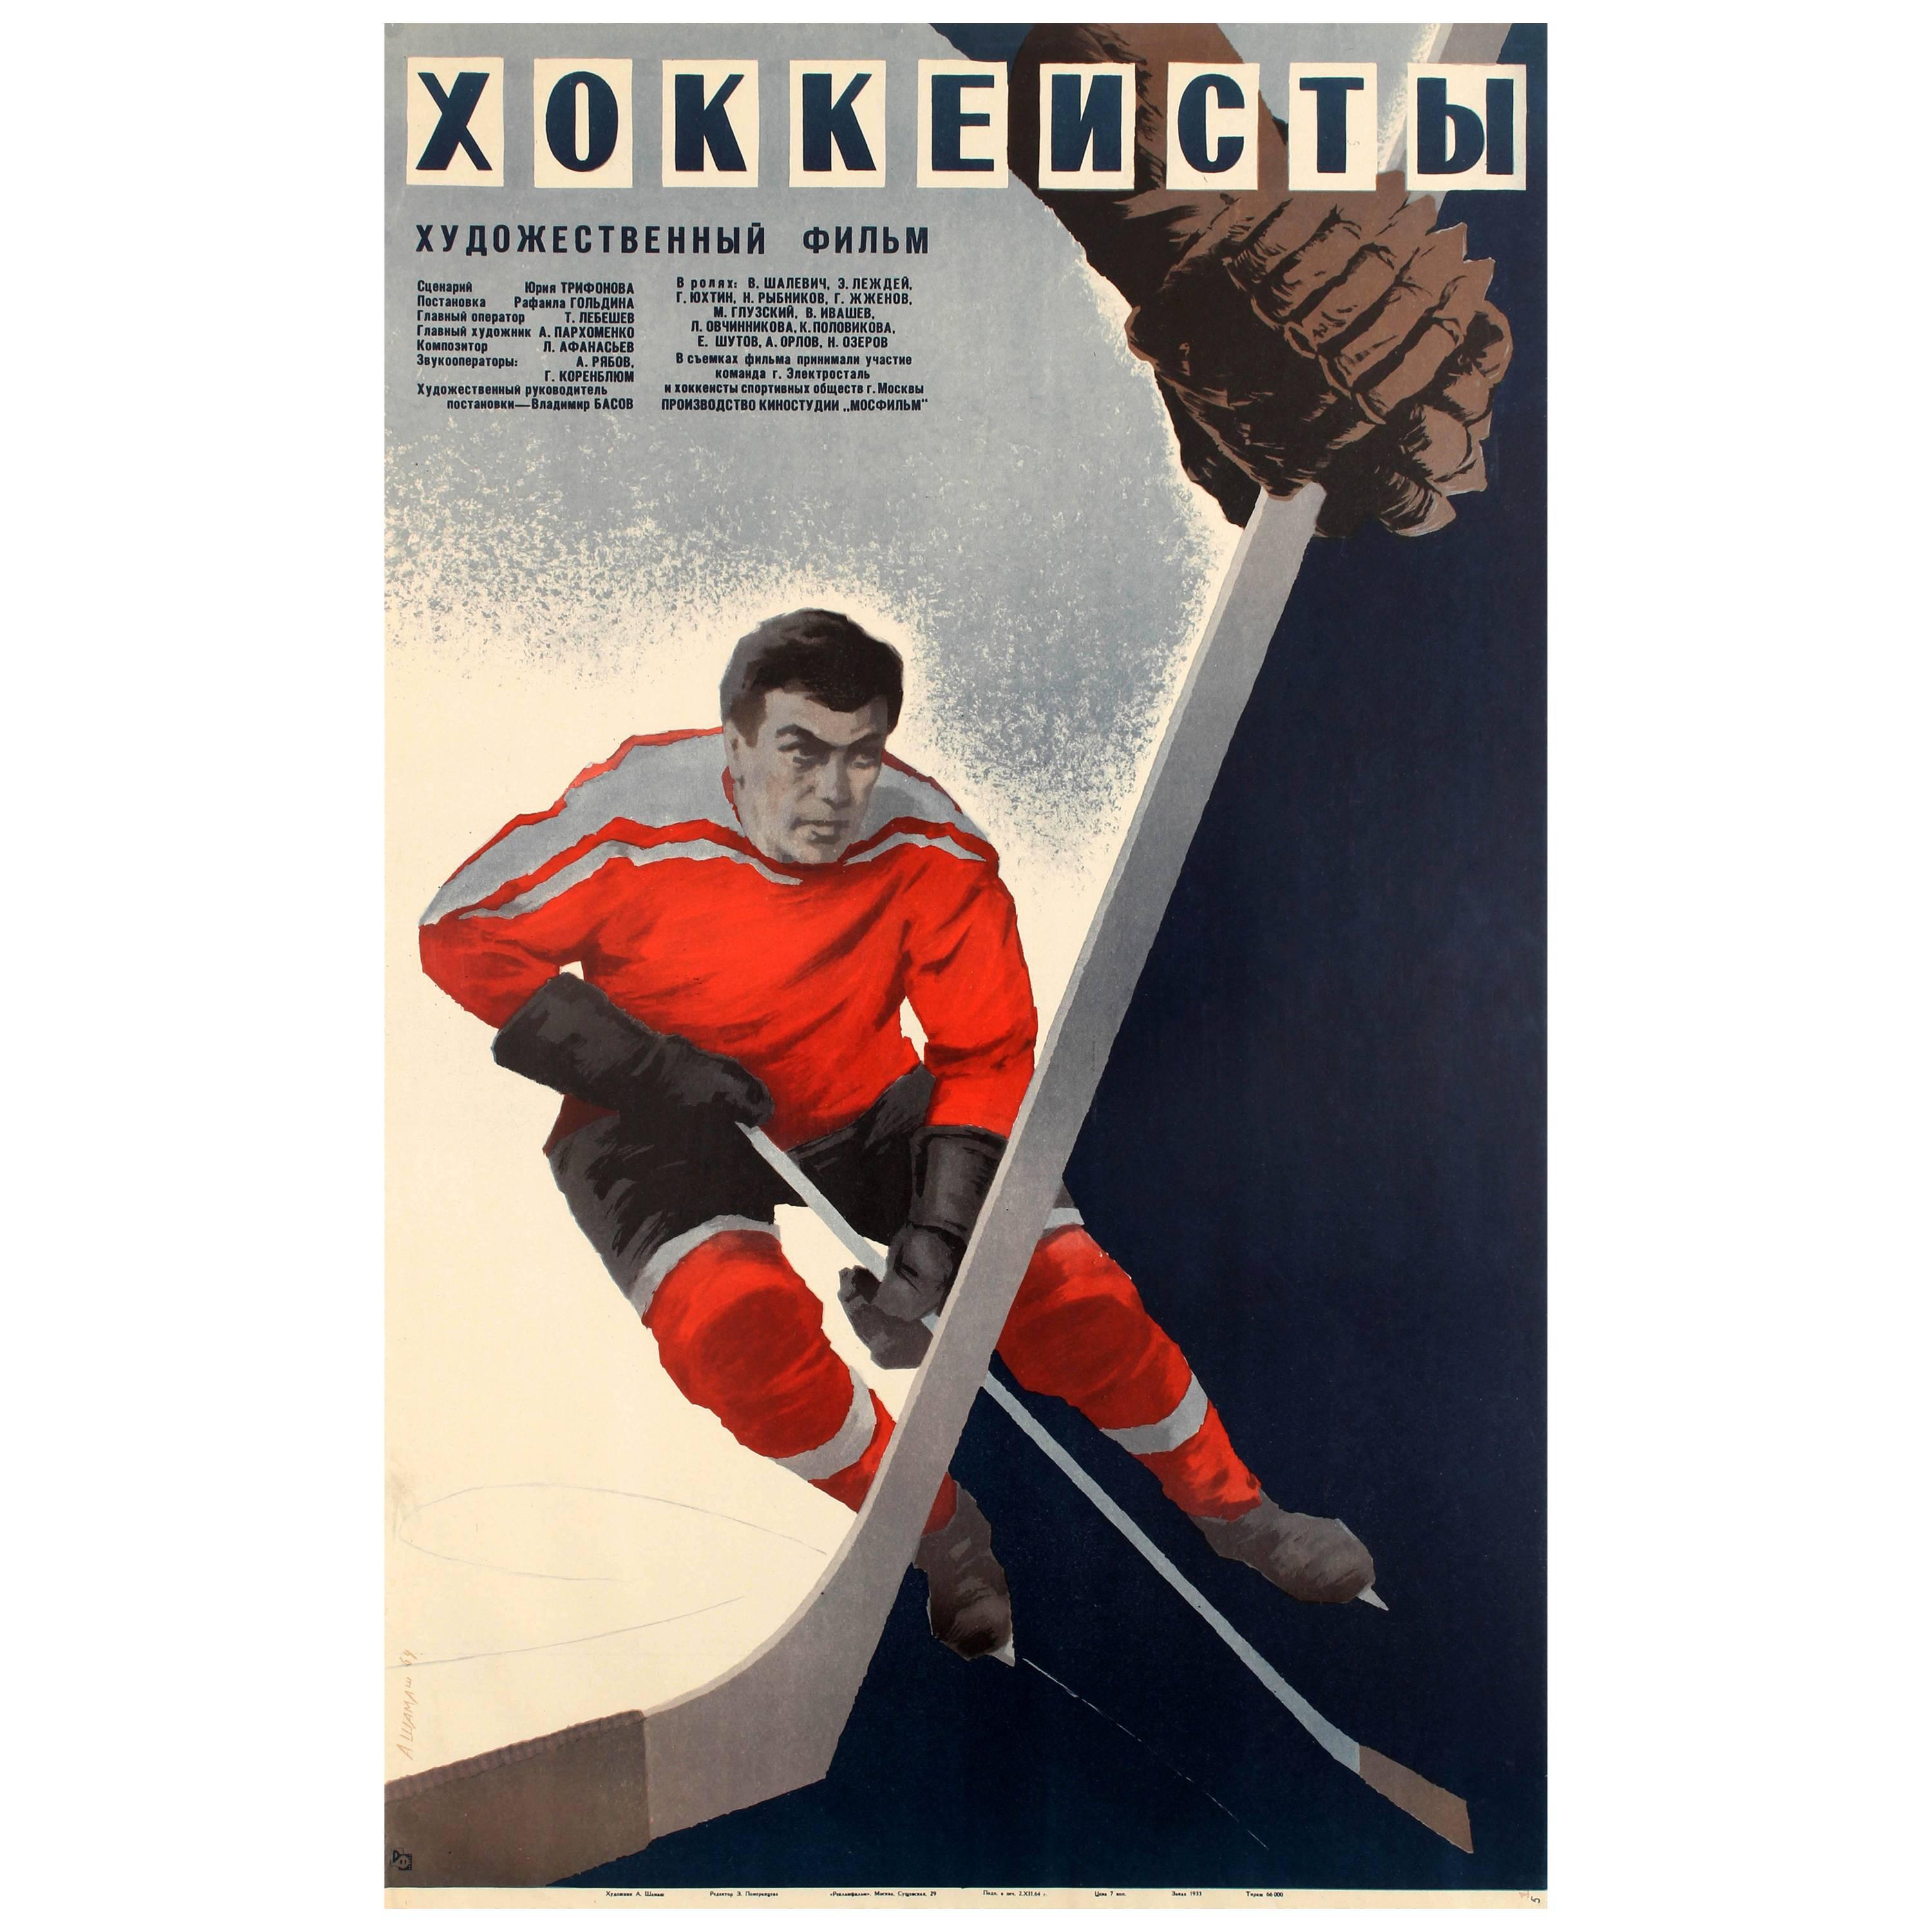 Original Vintage Soviet Movie Poster for a Sport Drama Film - The Hockey Players